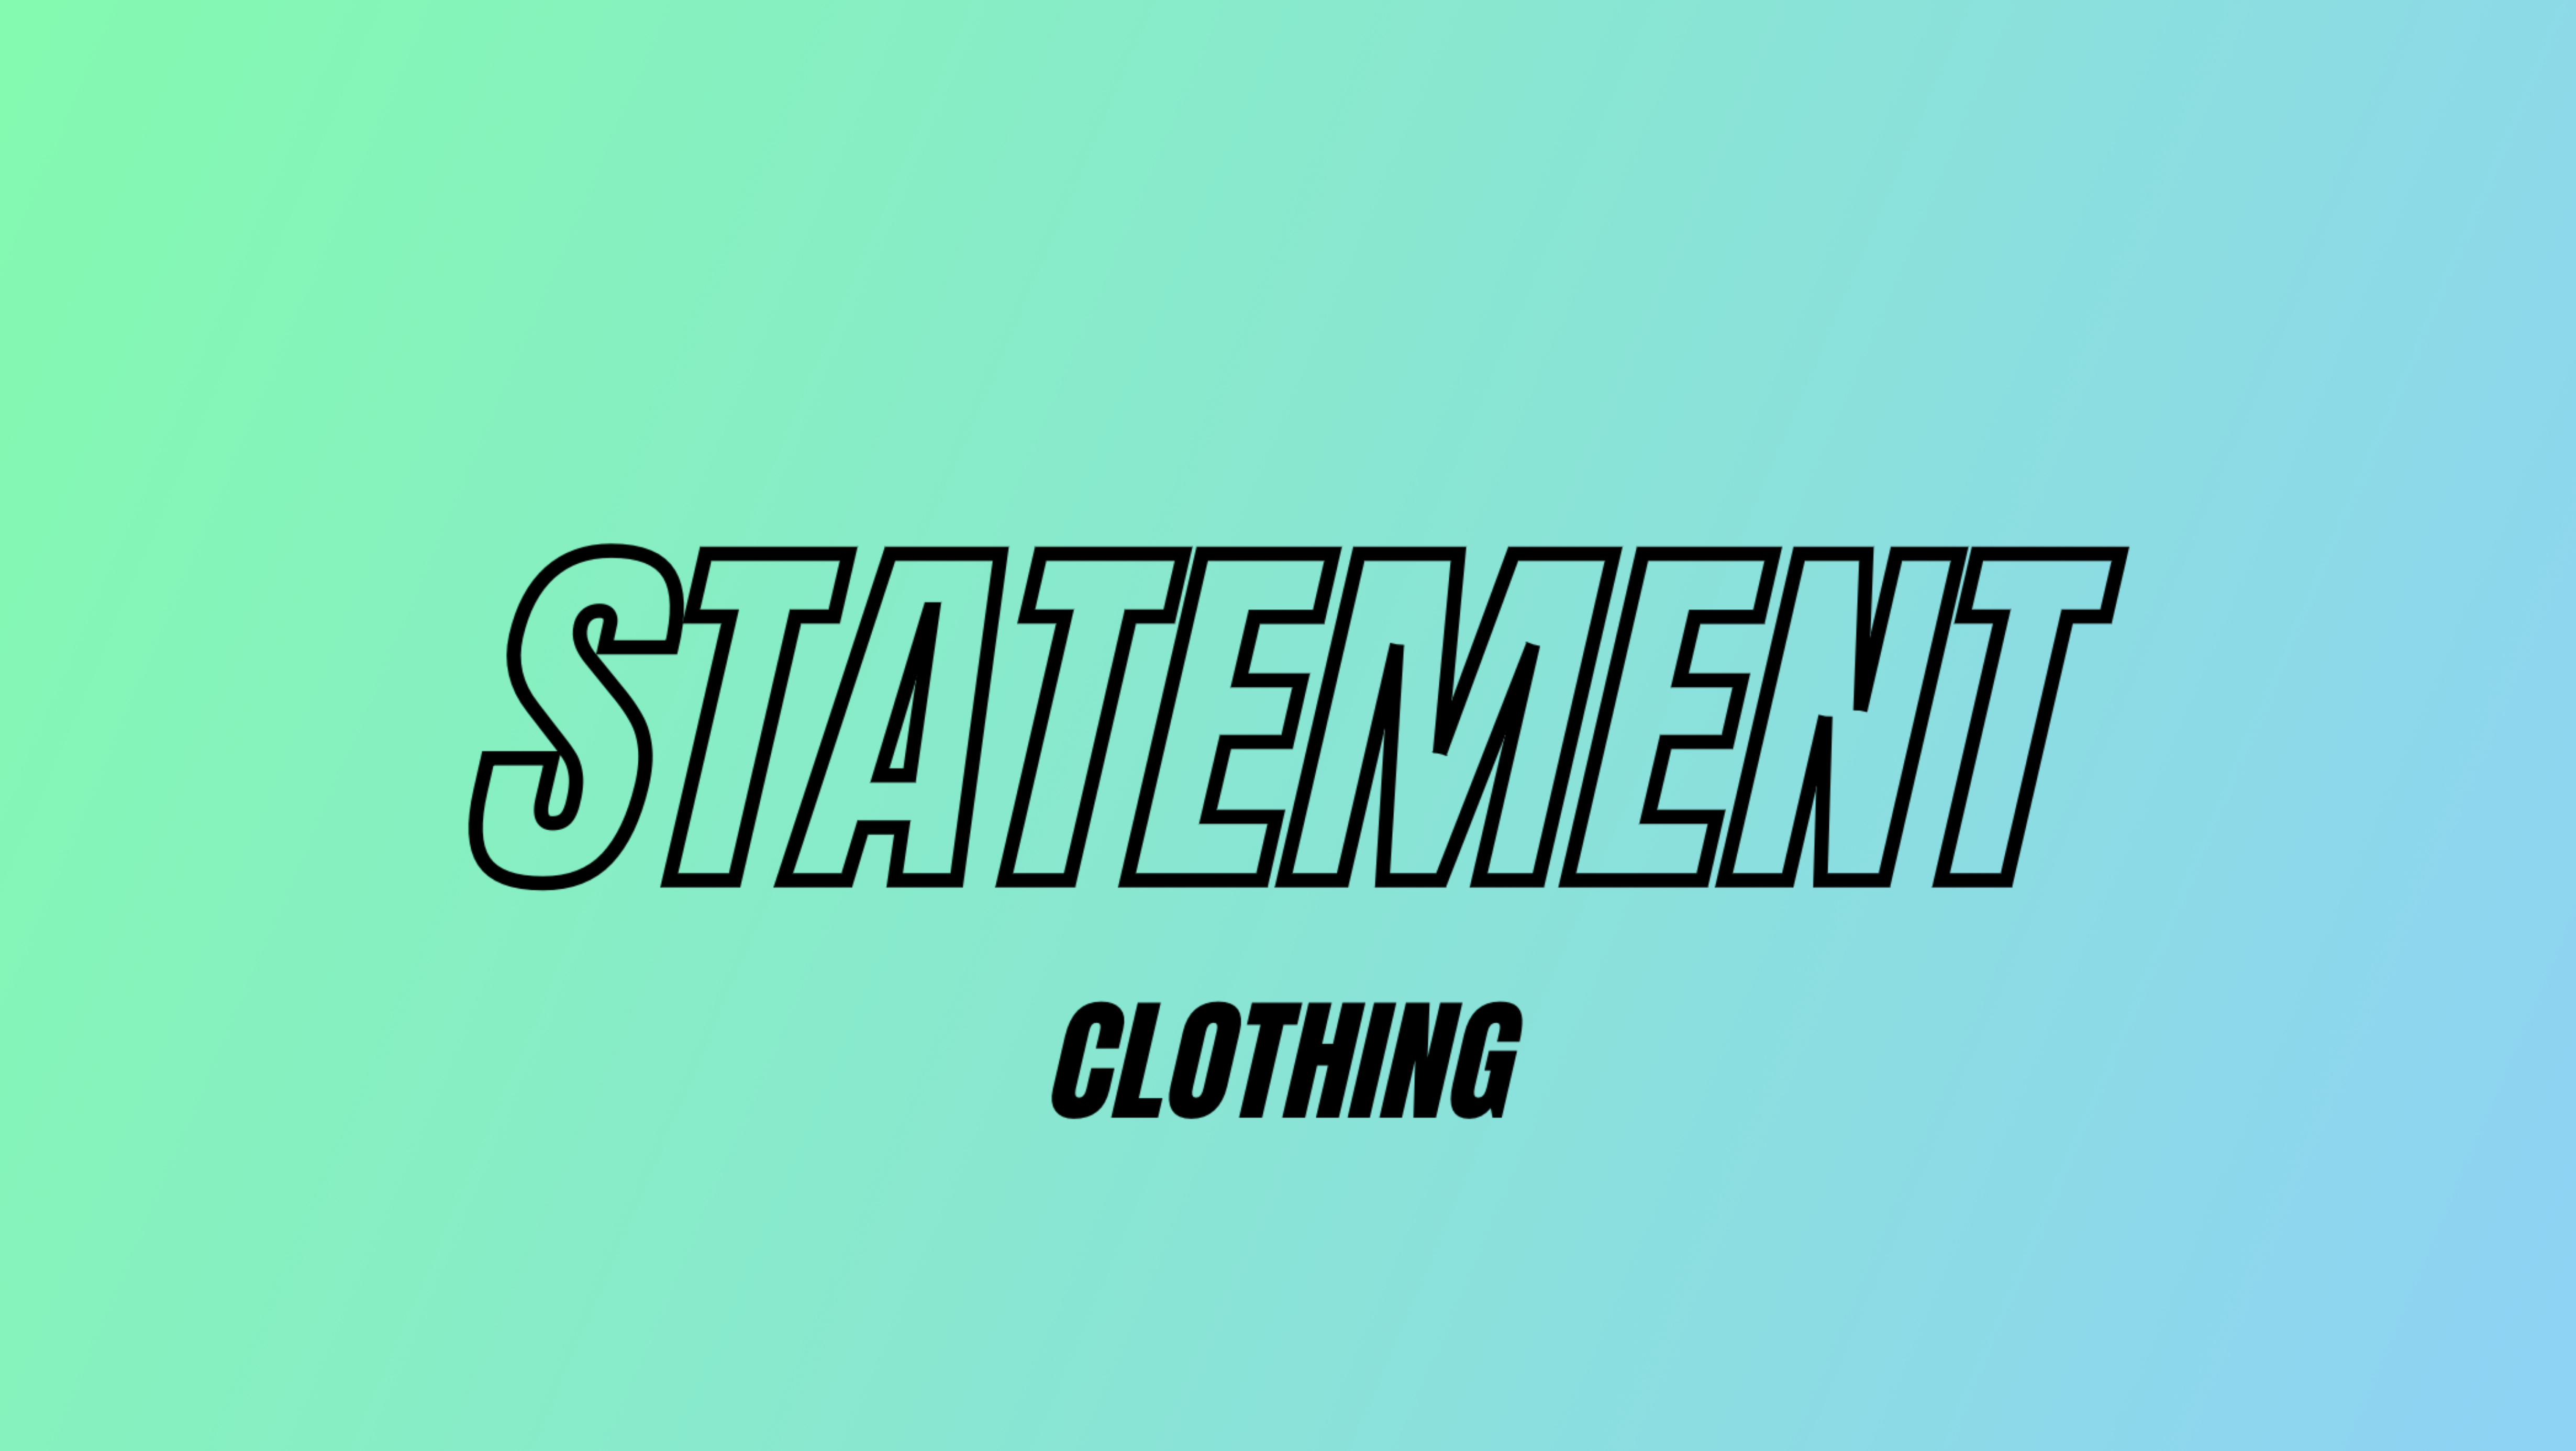 Statement Clothing